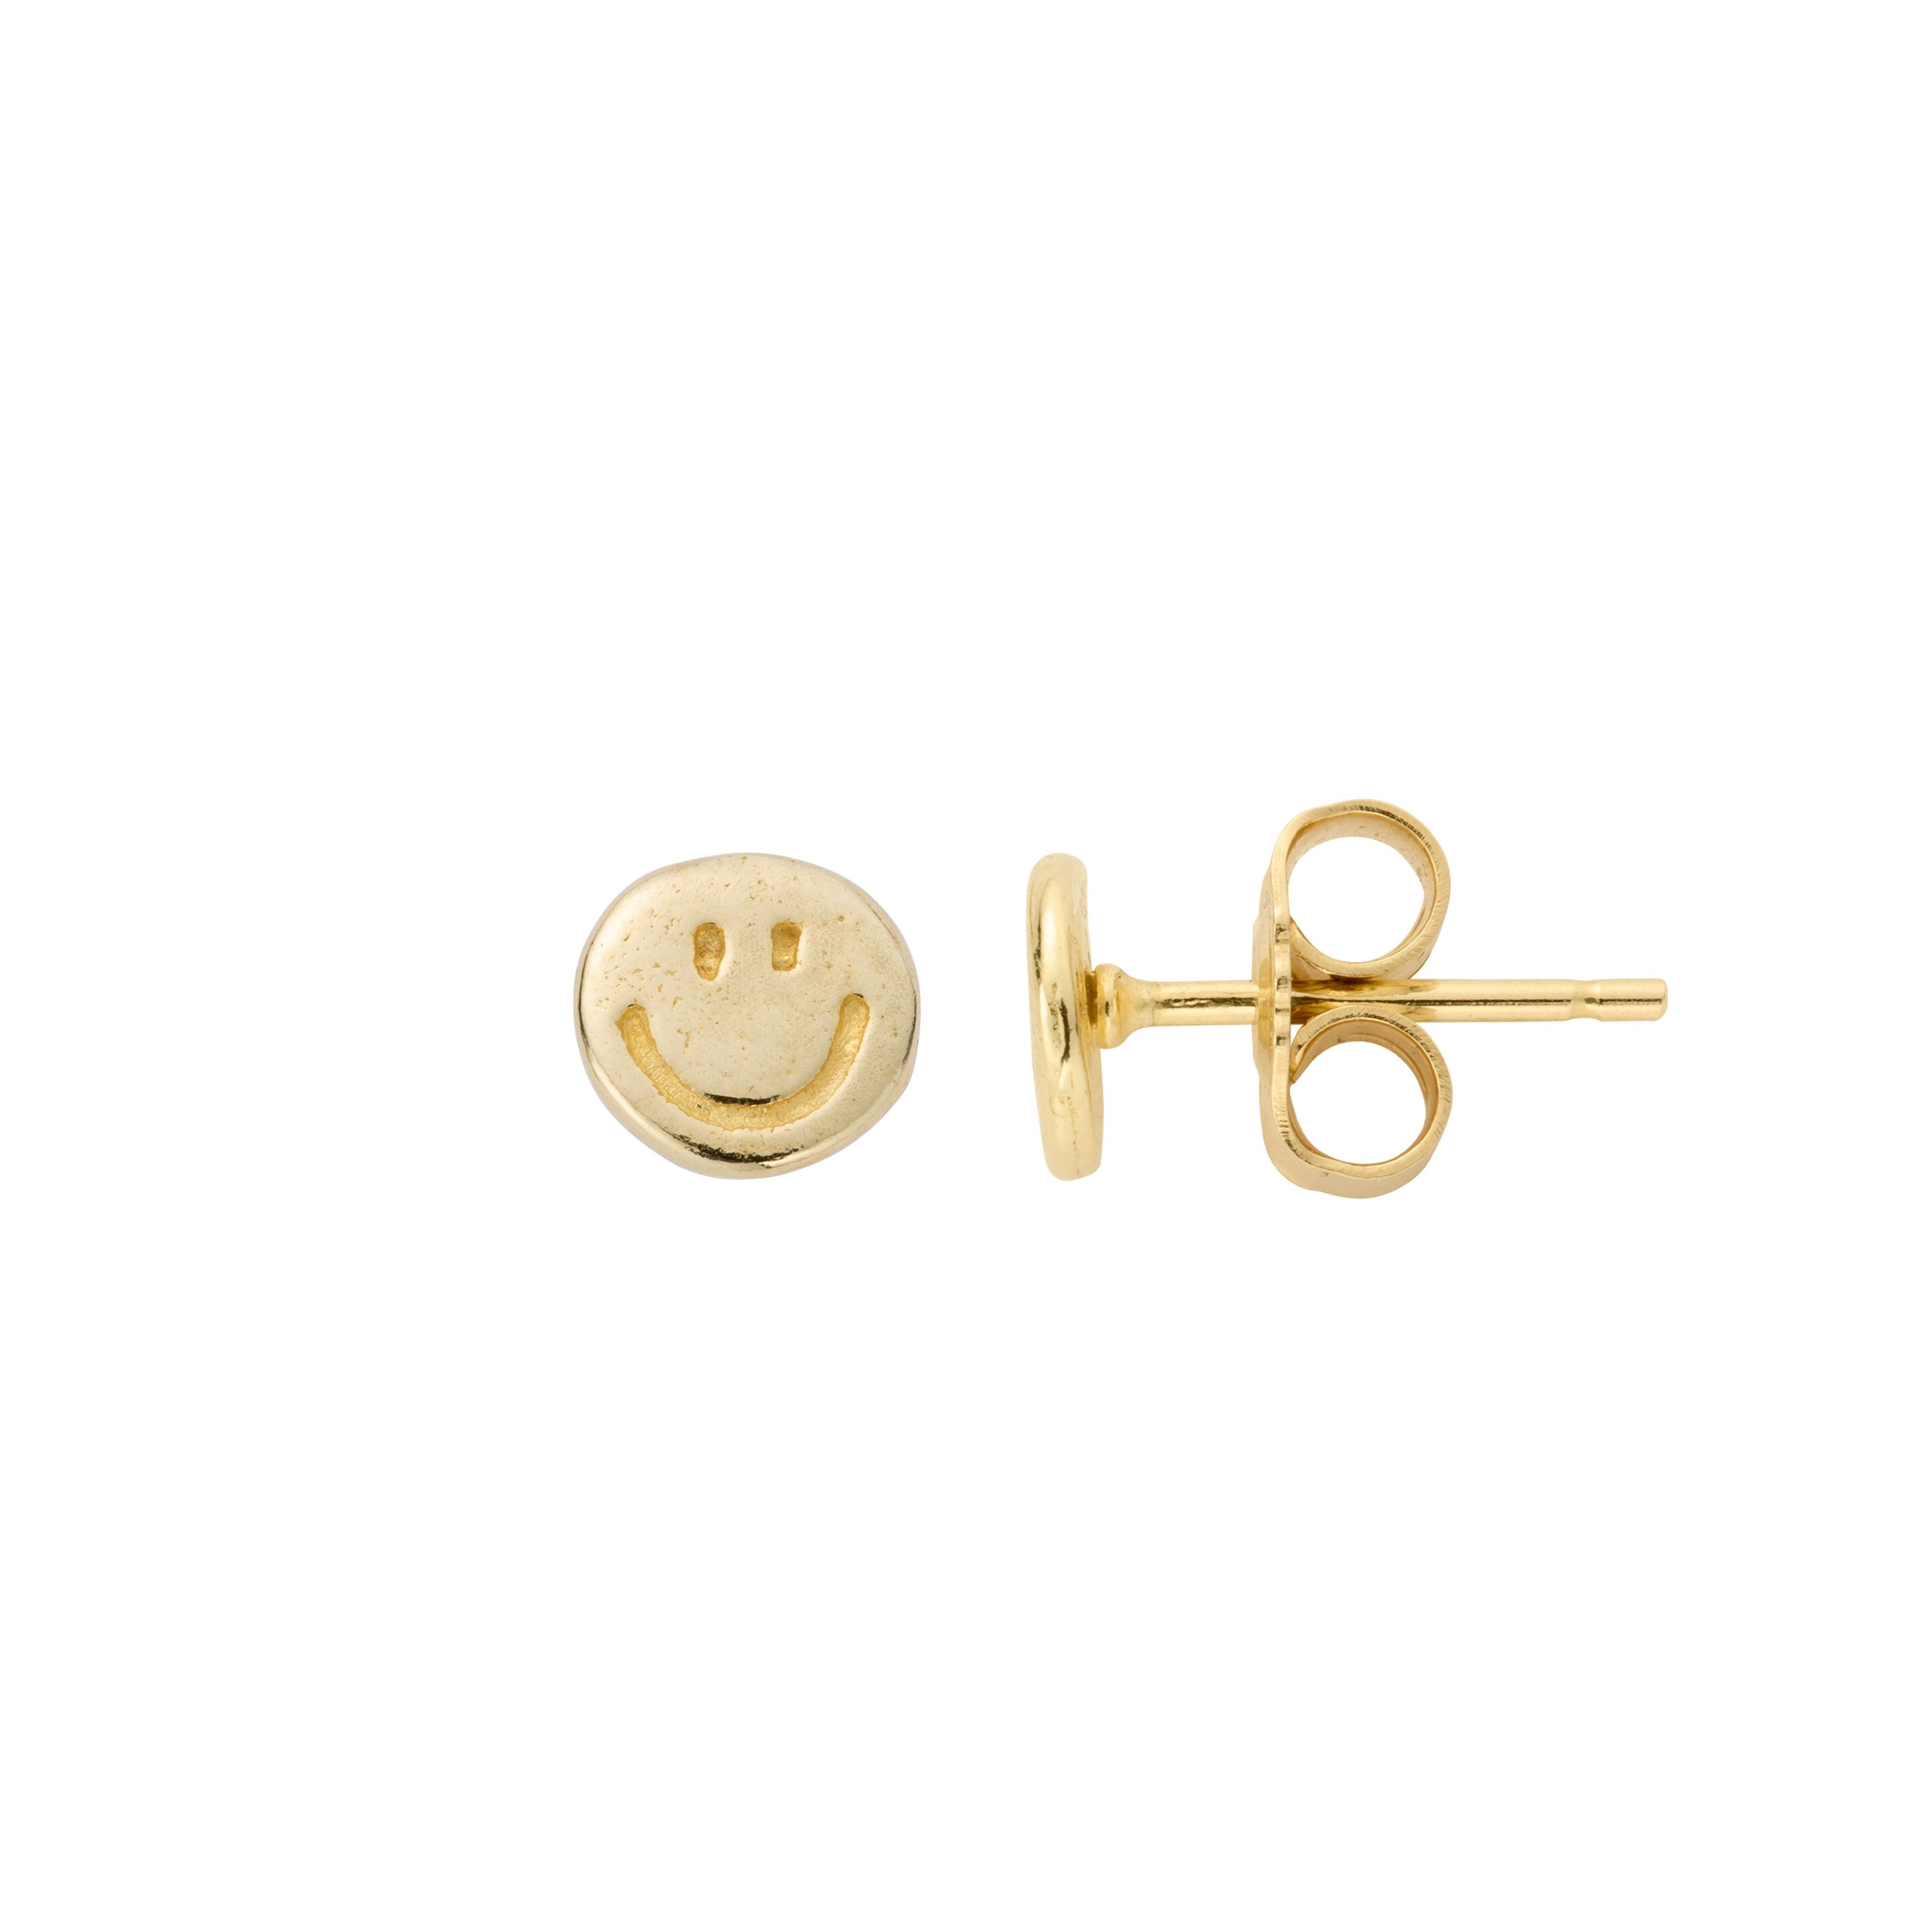 Gold Little Smiley Ear Charm Set